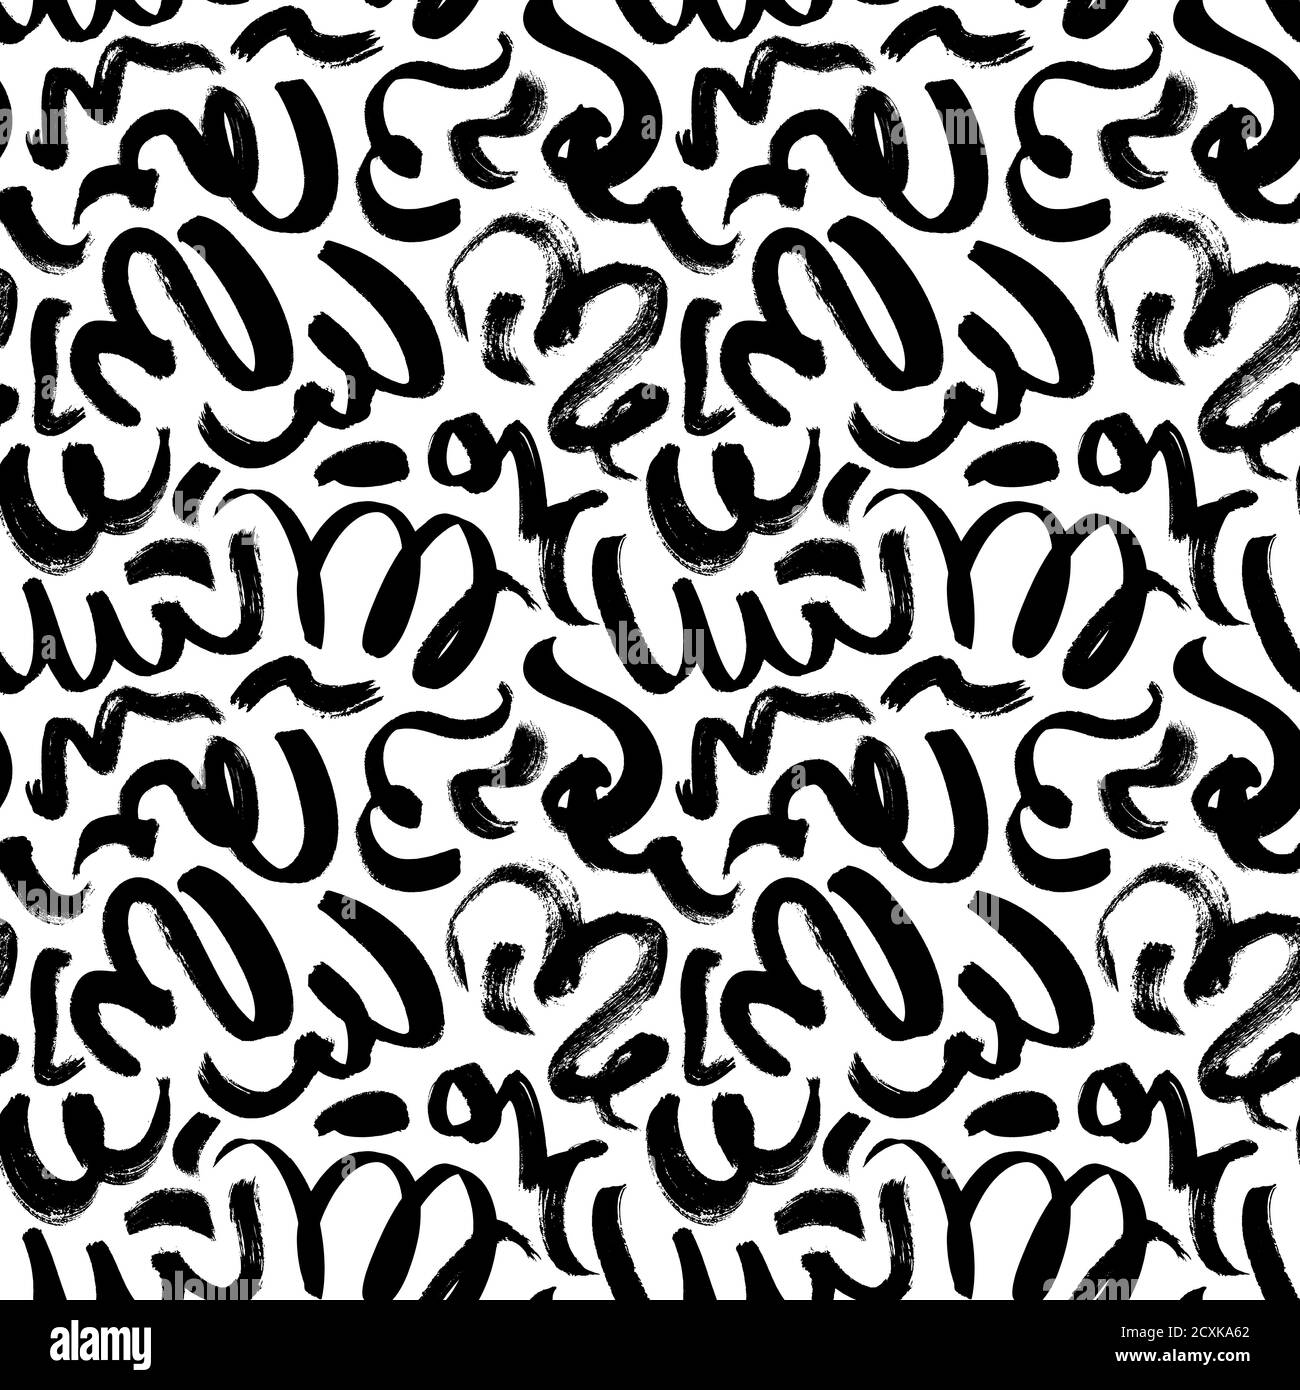 Swirled brush strokes vector seamless pattern Stock Vector